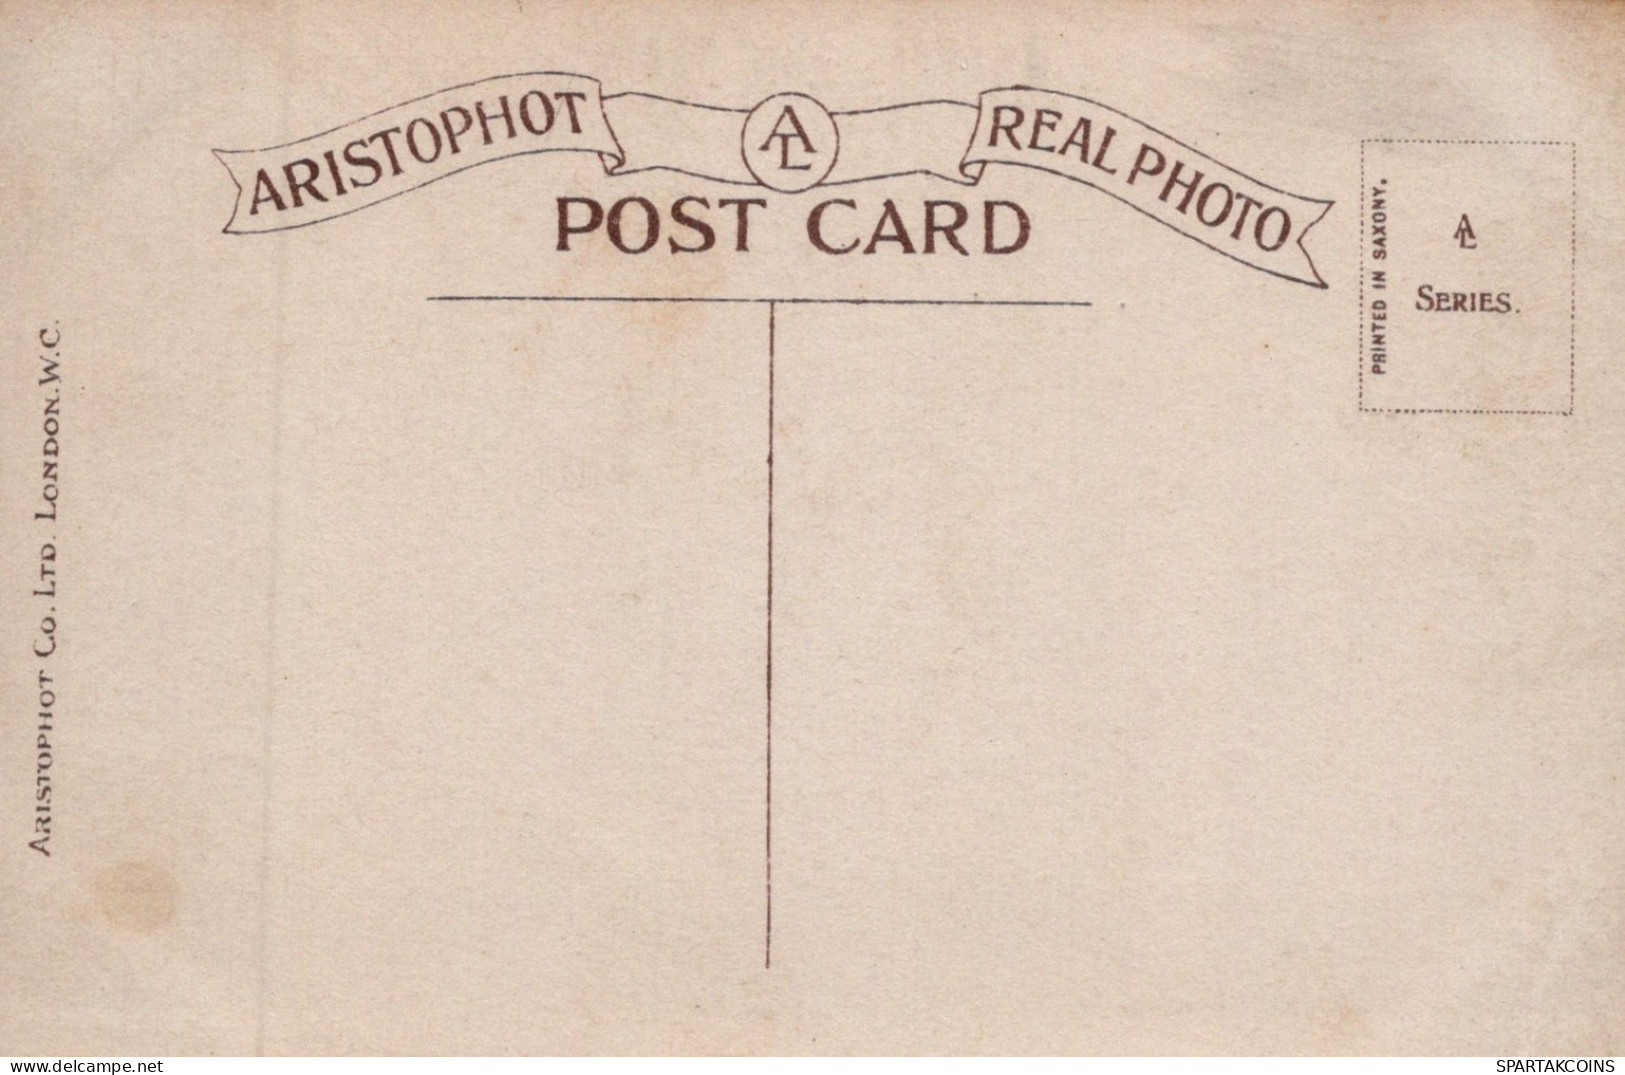 ÂNE Animaux Vintage Antique CPA Carte Postale #PAA033.FR - Donkeys